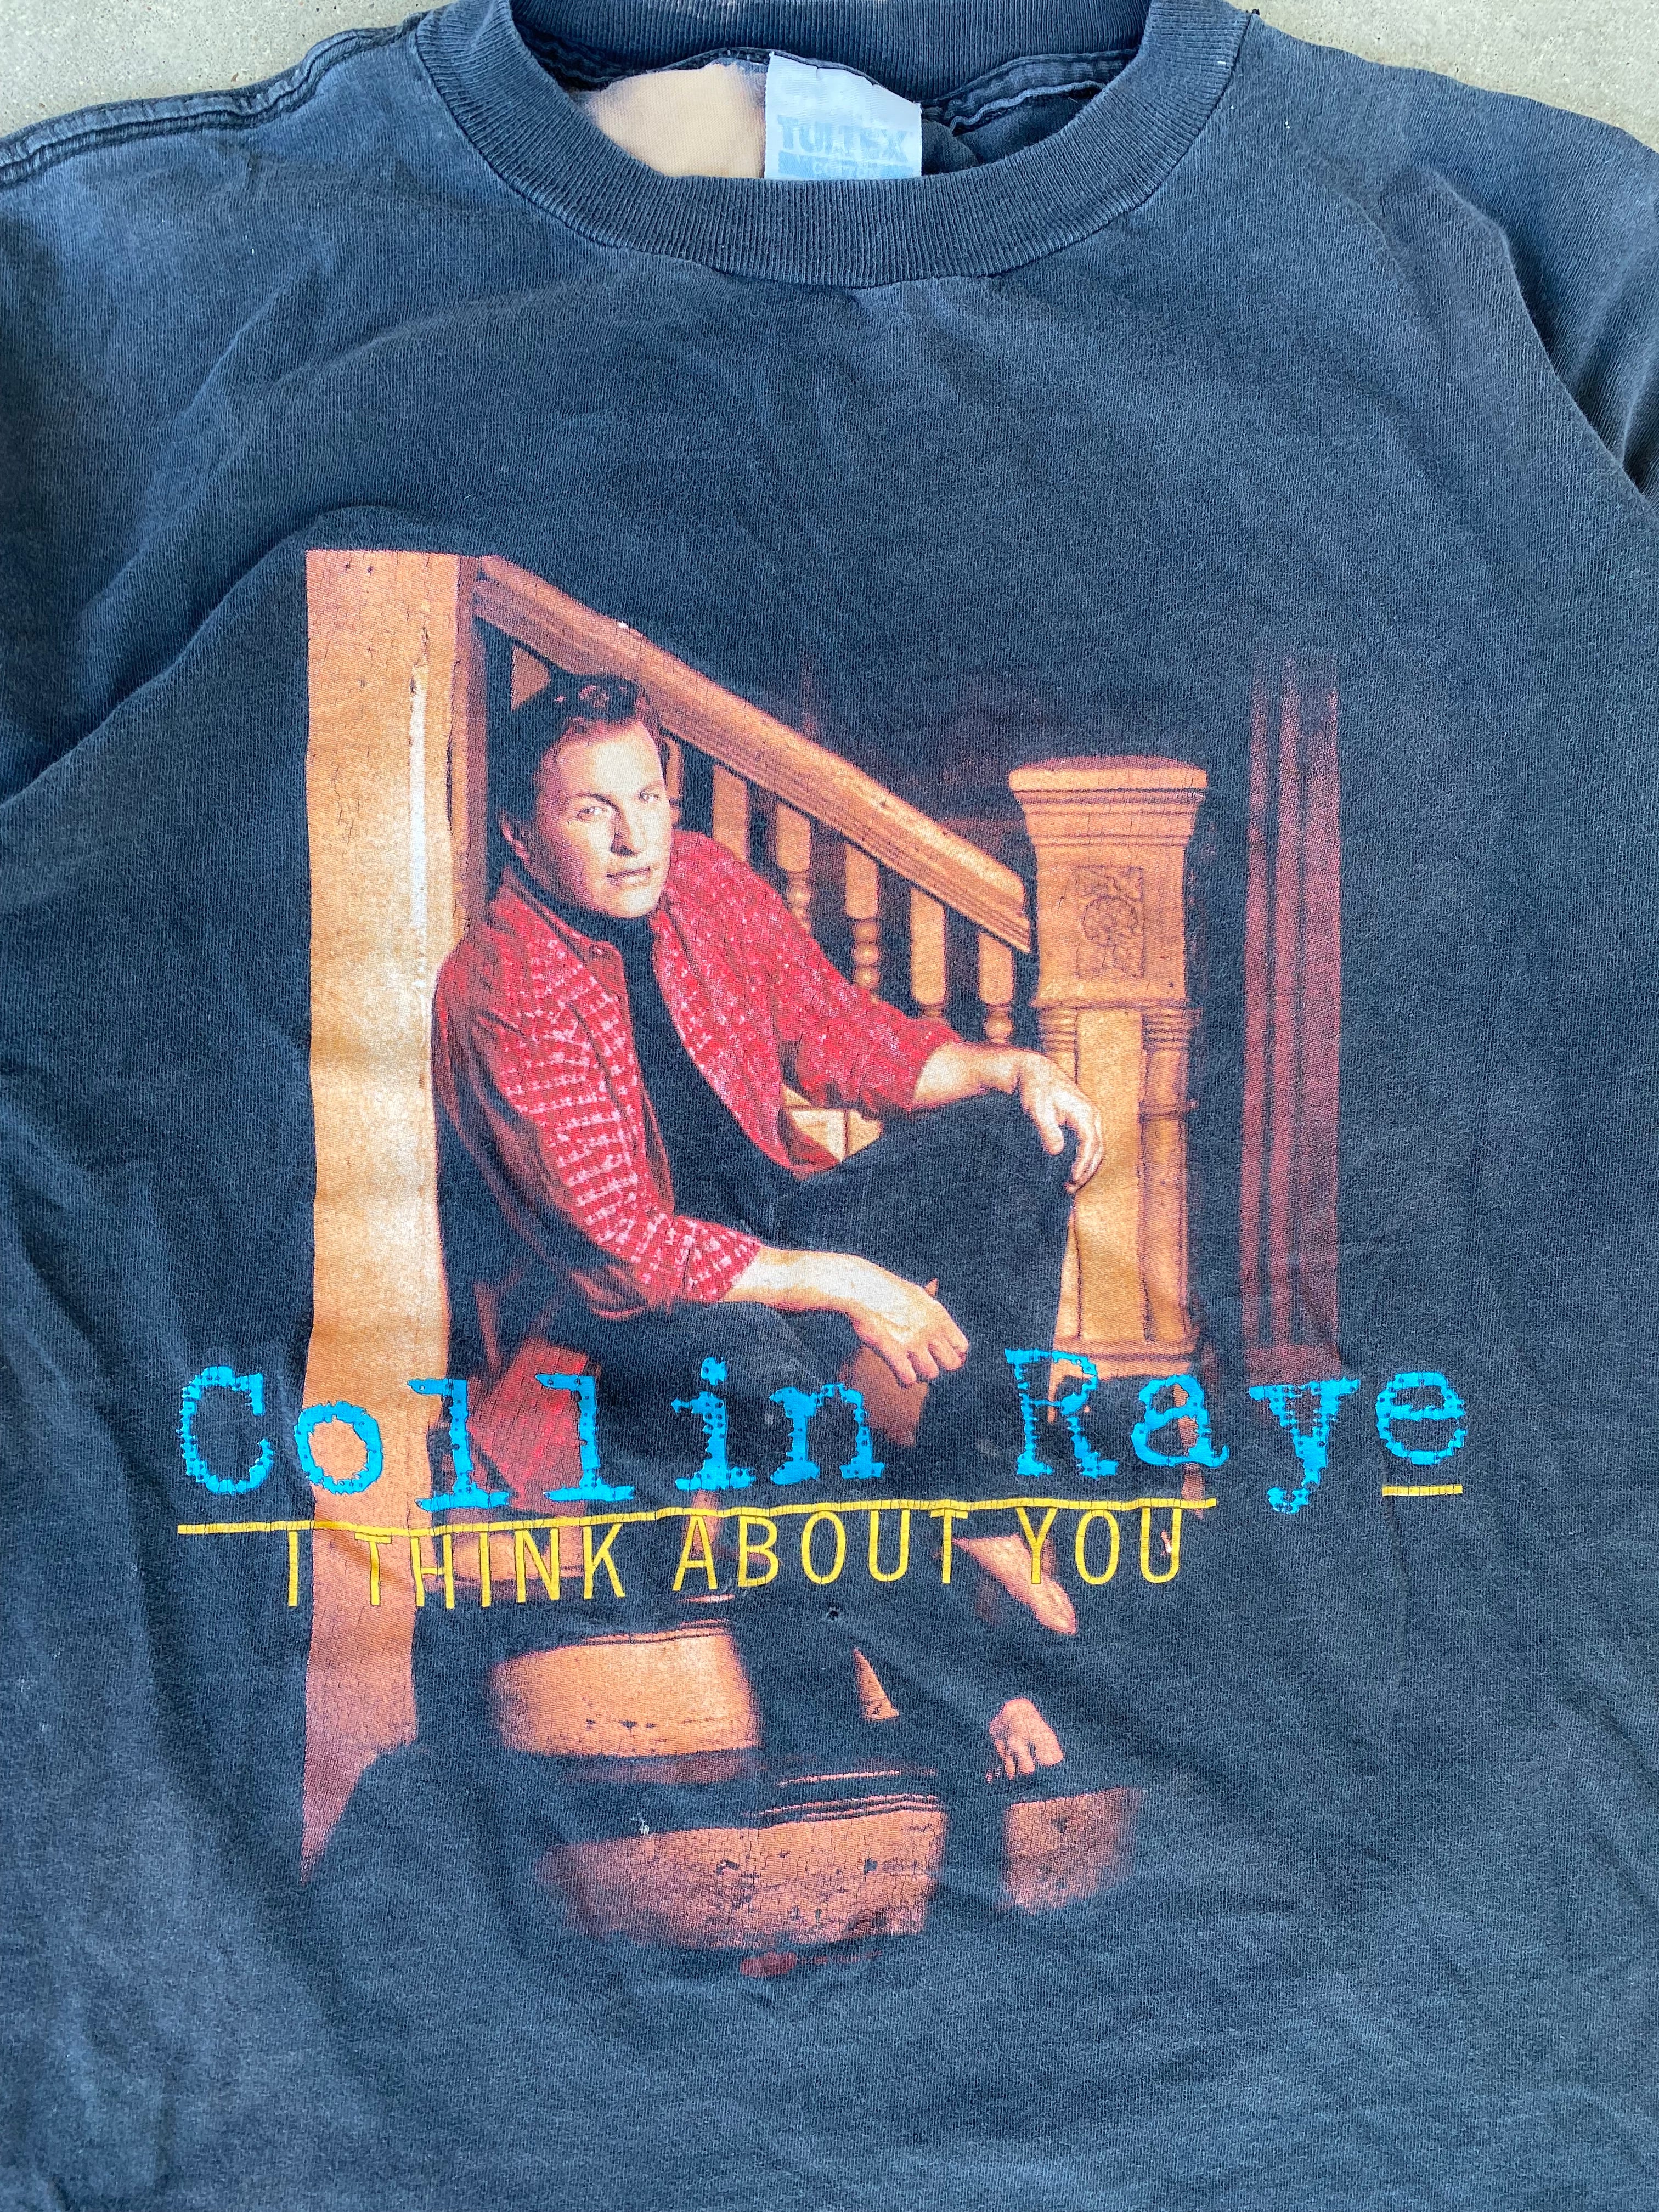 1996 Collin Raye "Think About You" Tour T-Shirt (L/XL)